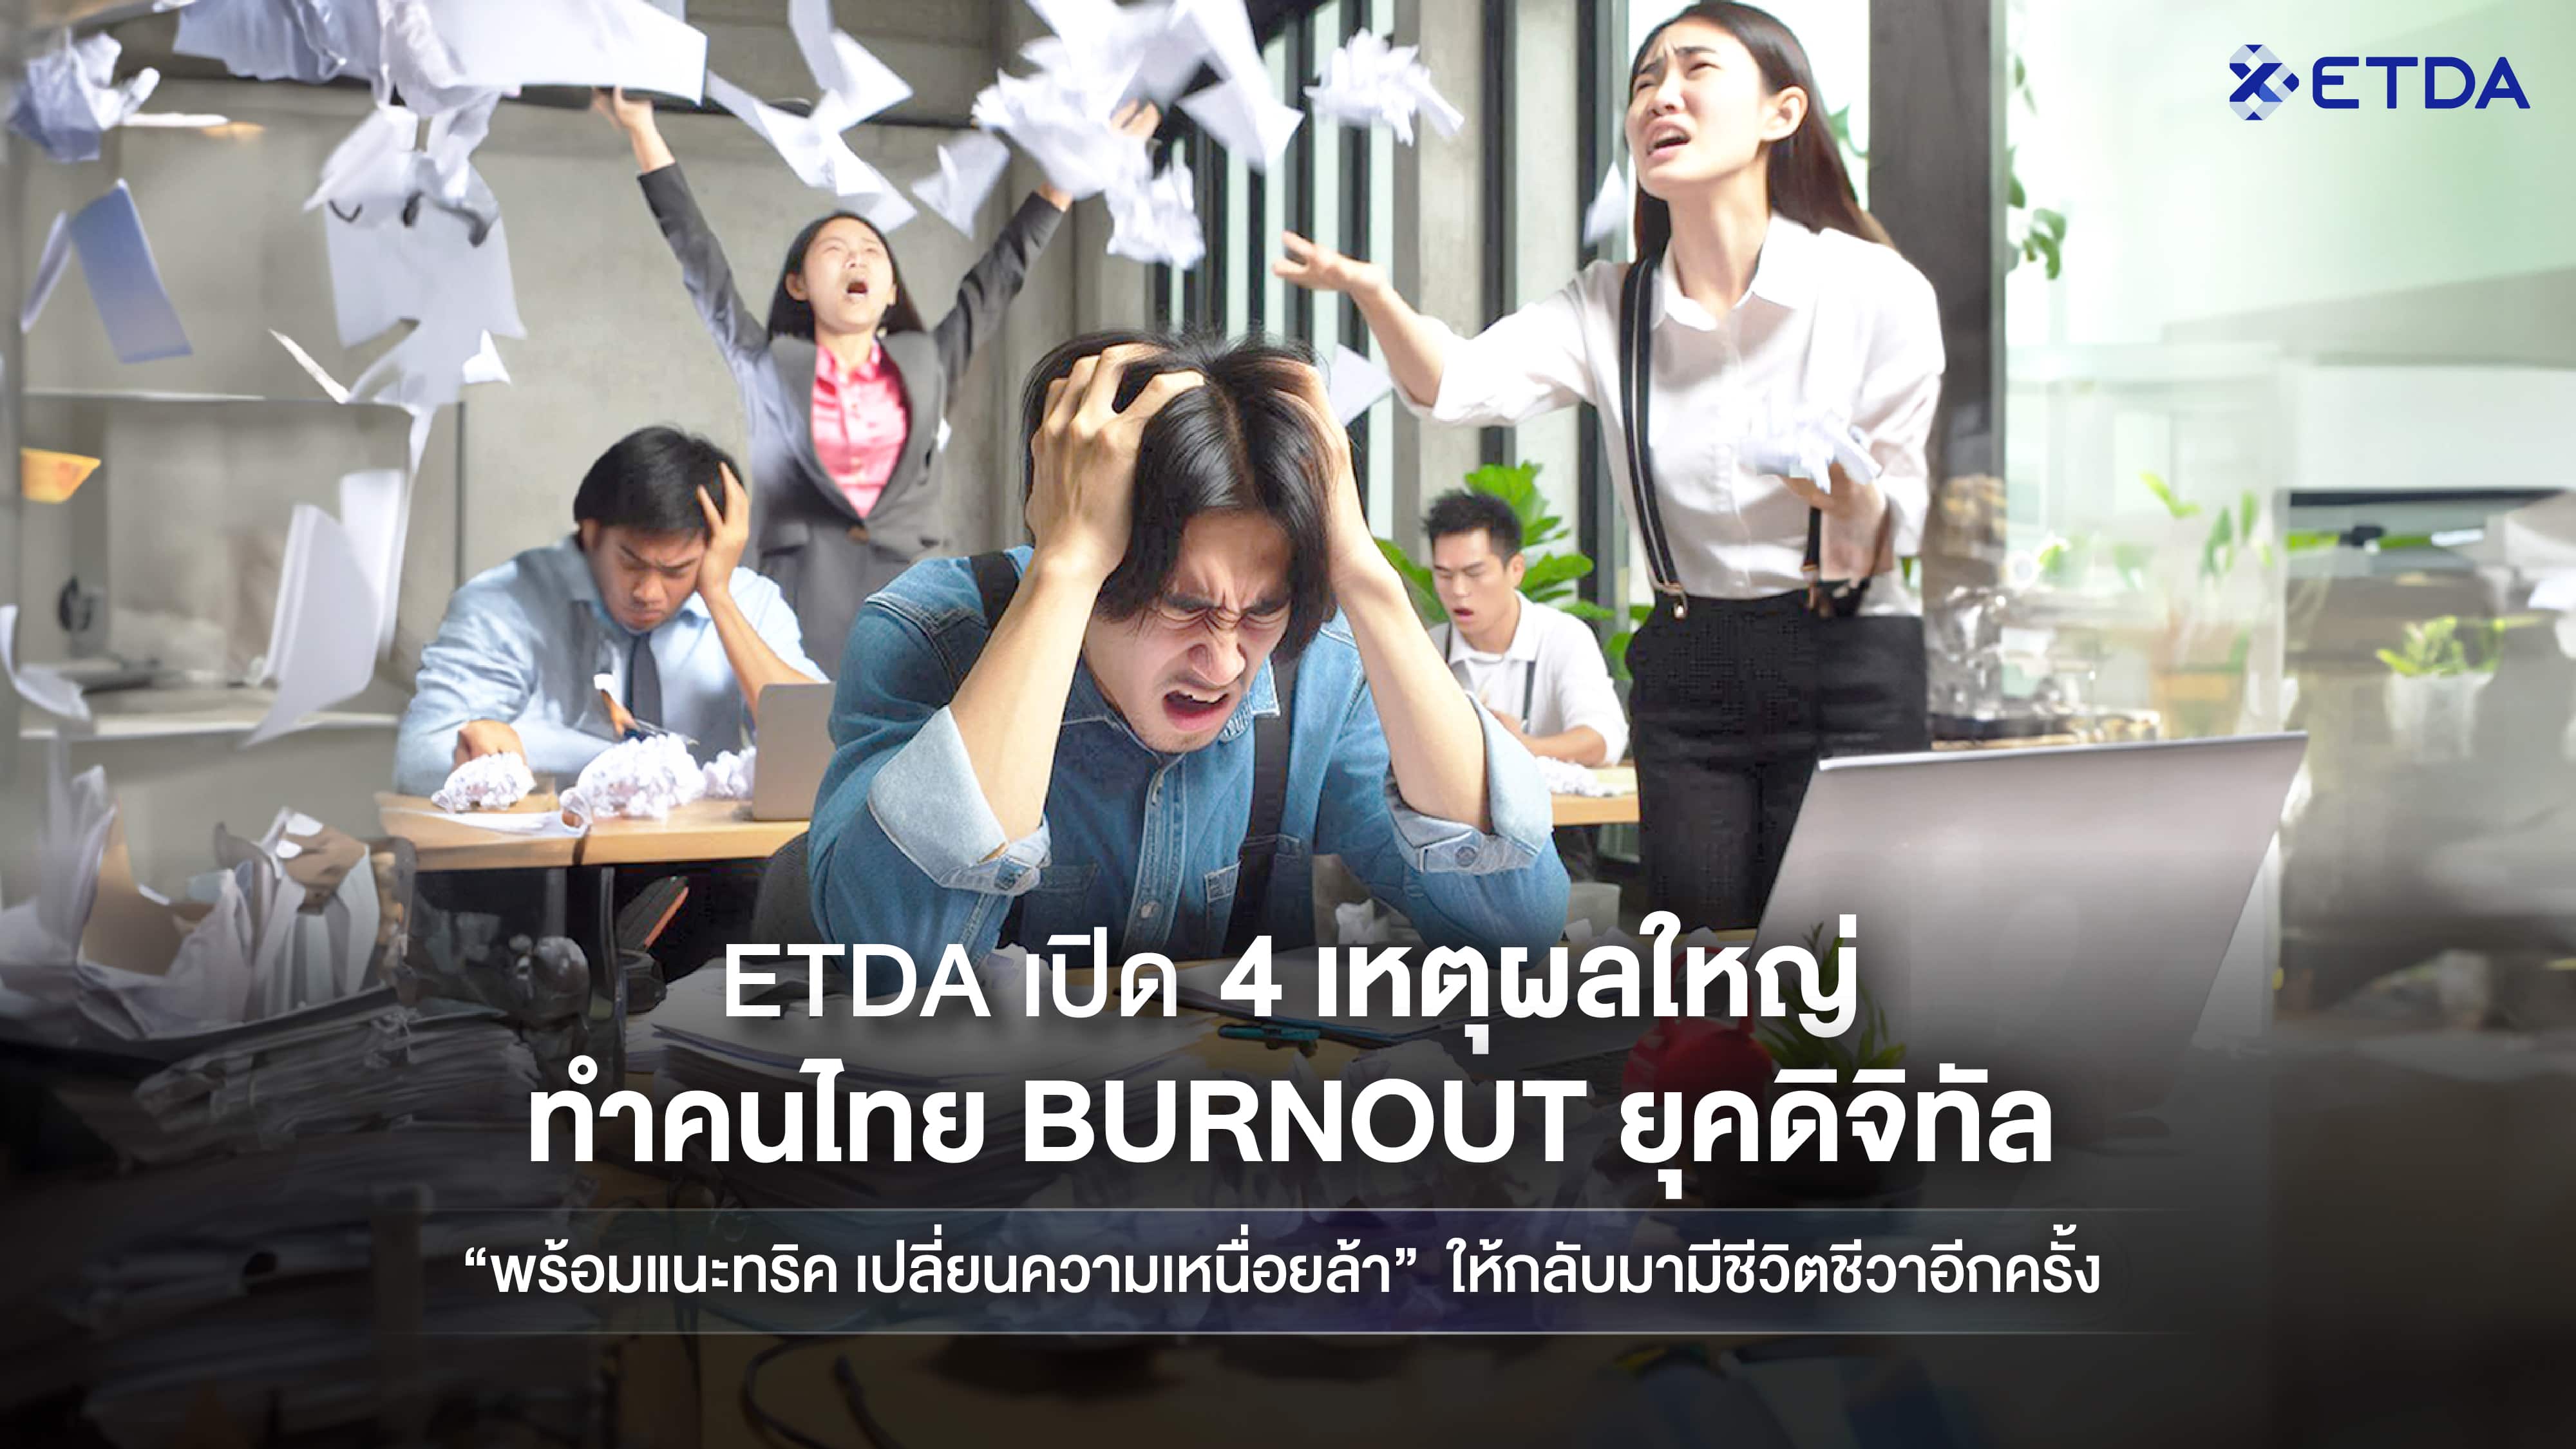 ETDA เปิด 4 เหตุผลใหญ่ ‘ทำคนไทย Burnout ยุคดิจิทัล’  พร้อมทริคเปลี่ยนความเหนื่อยล้า ให้กลับมามีชีวิต